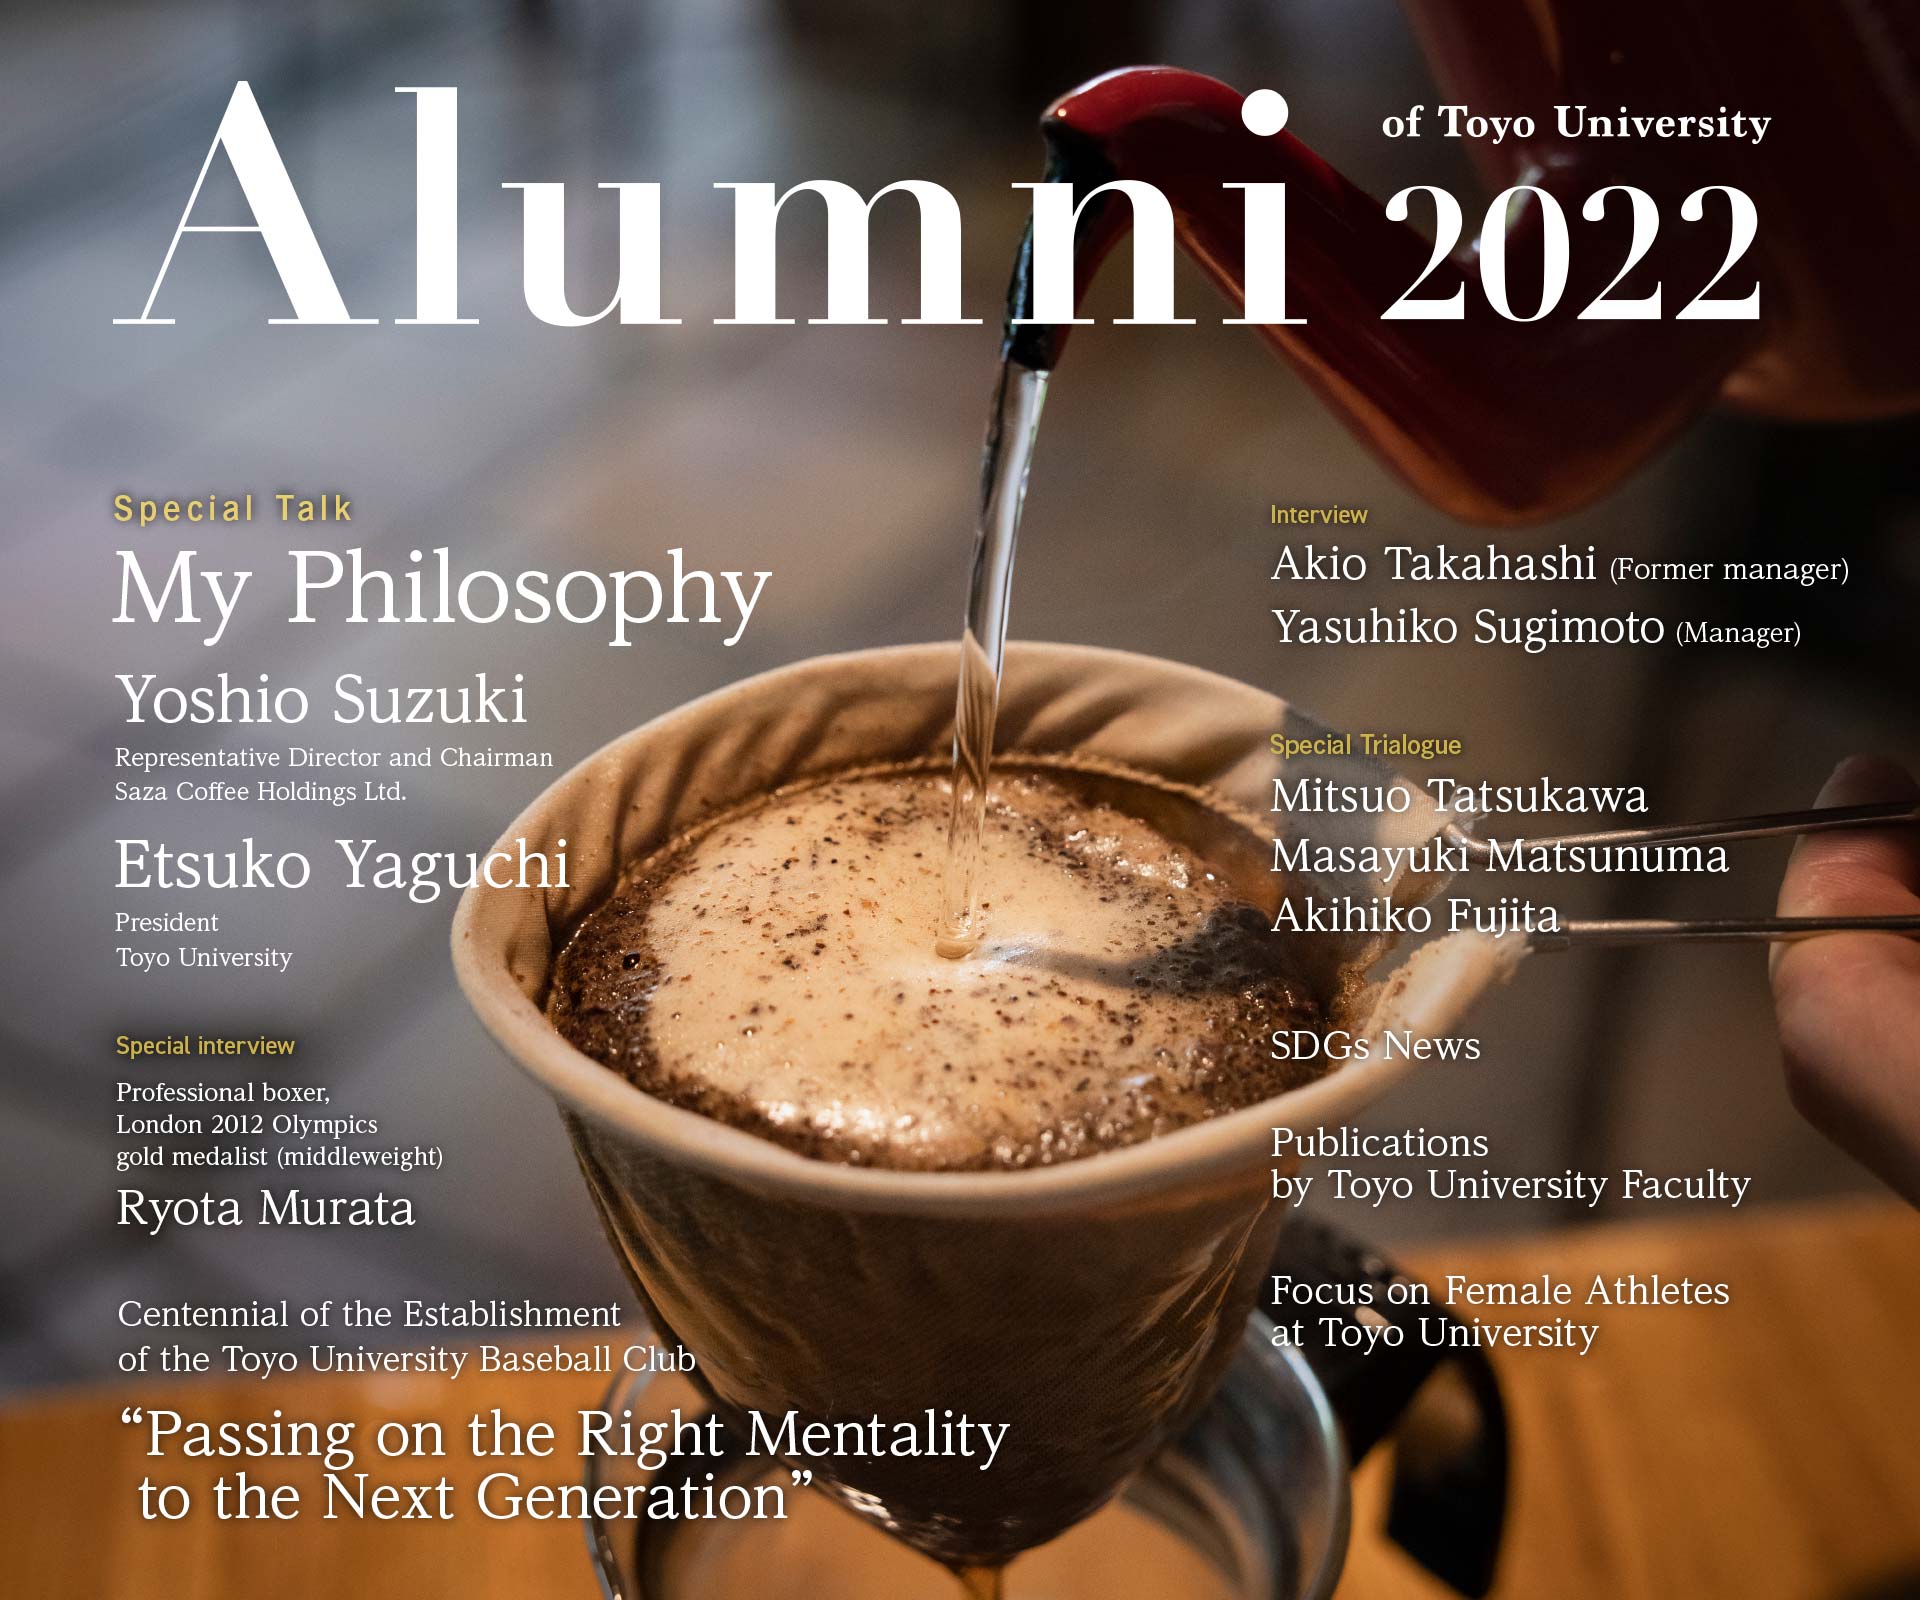 Alumni 2022 of Toyo University